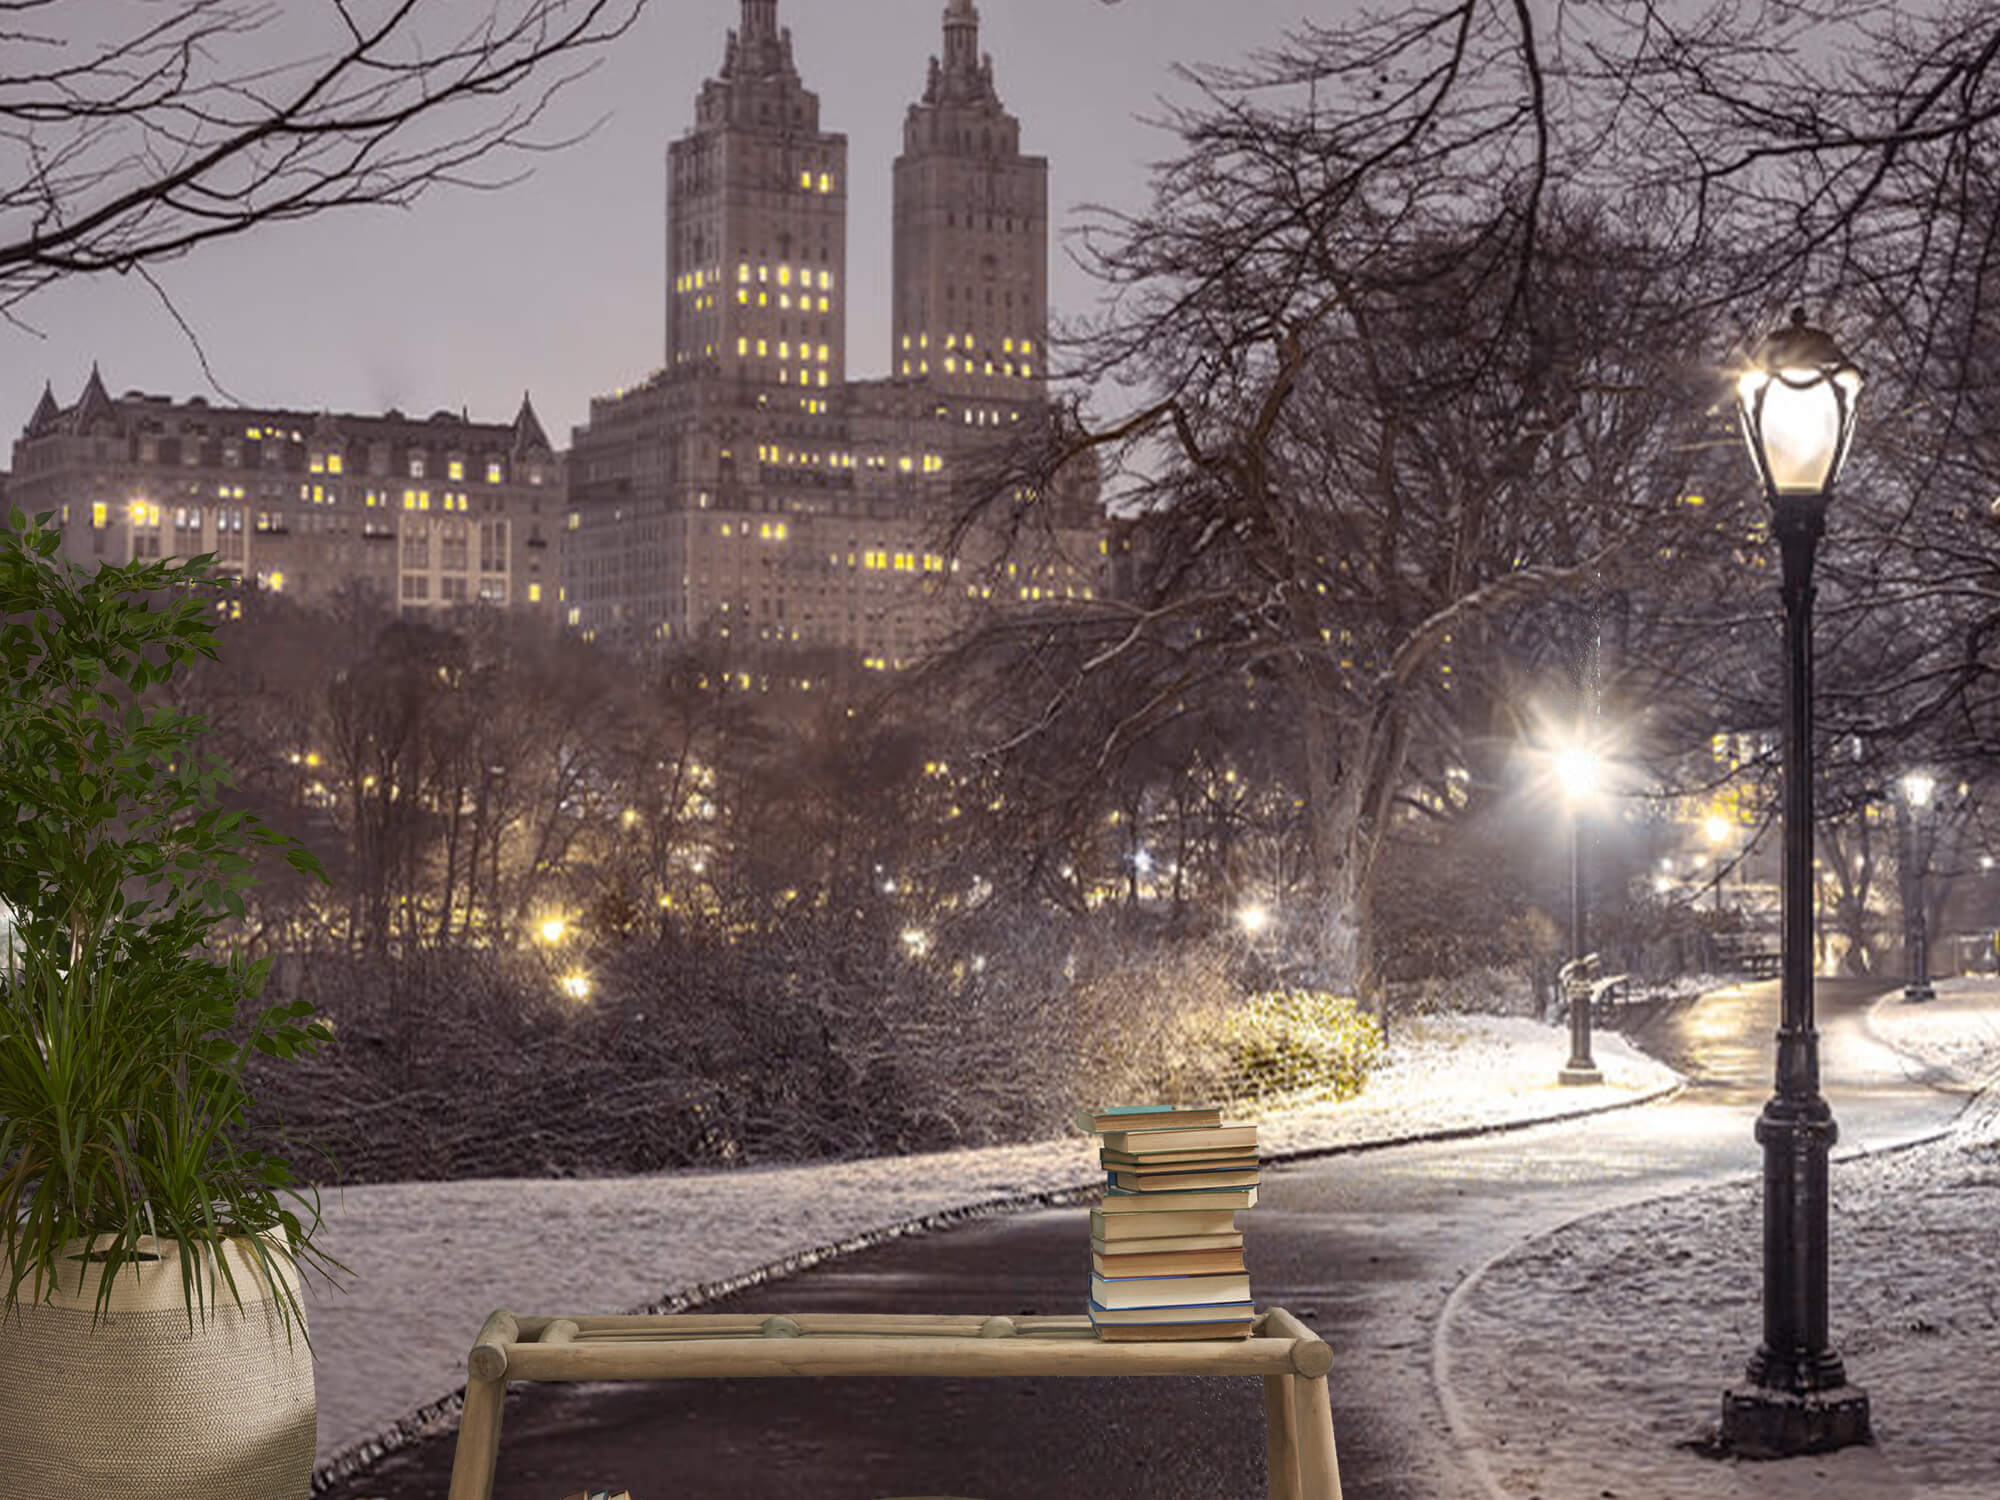  Central Park pokryty śniegiem 12